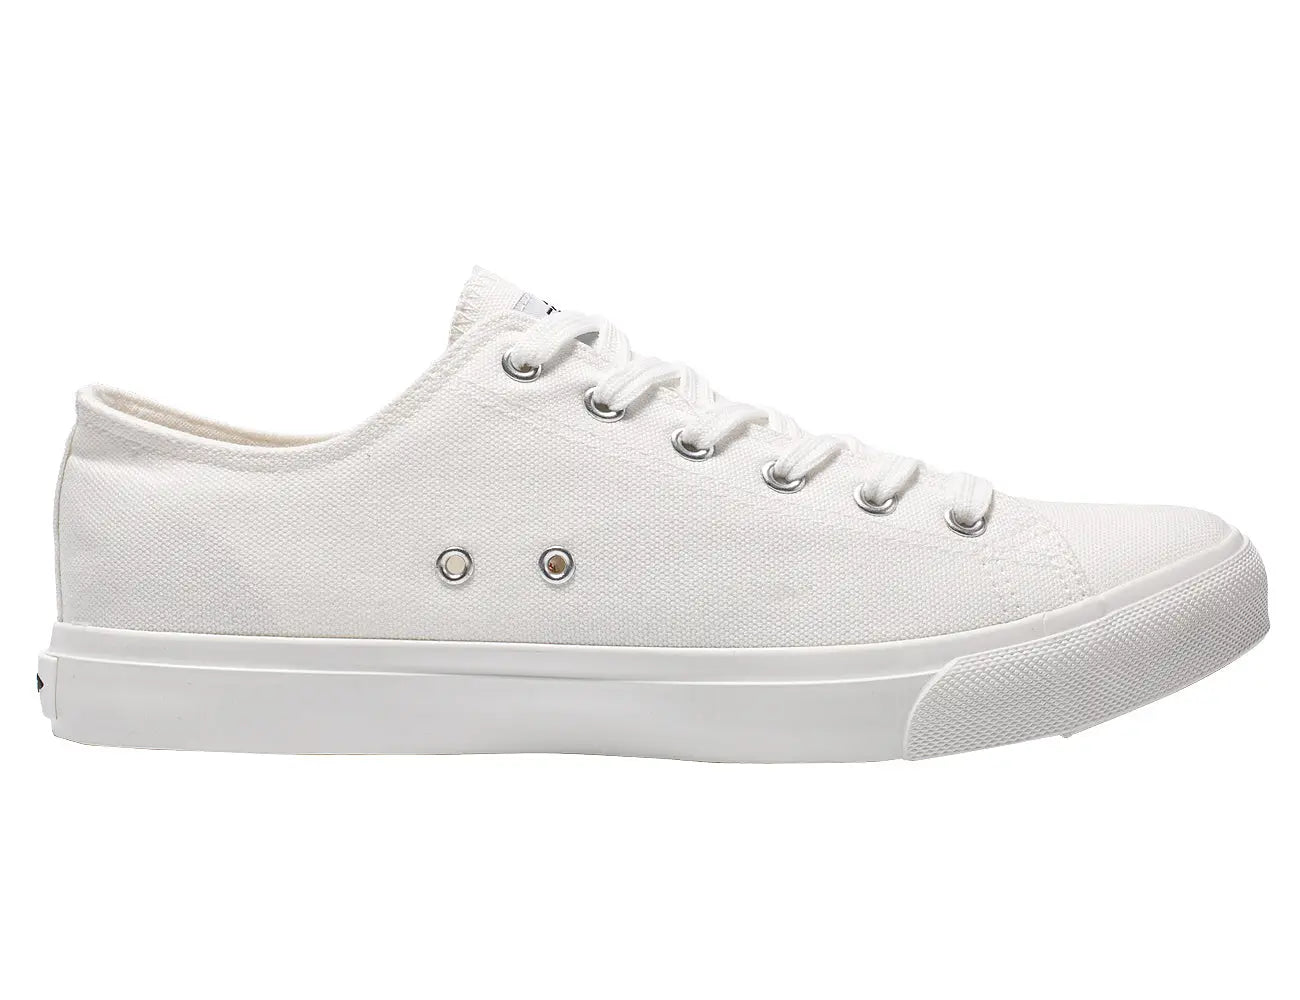 Fear0 NJ Unisex All White Canvas Sneakers Shoes for Men Women